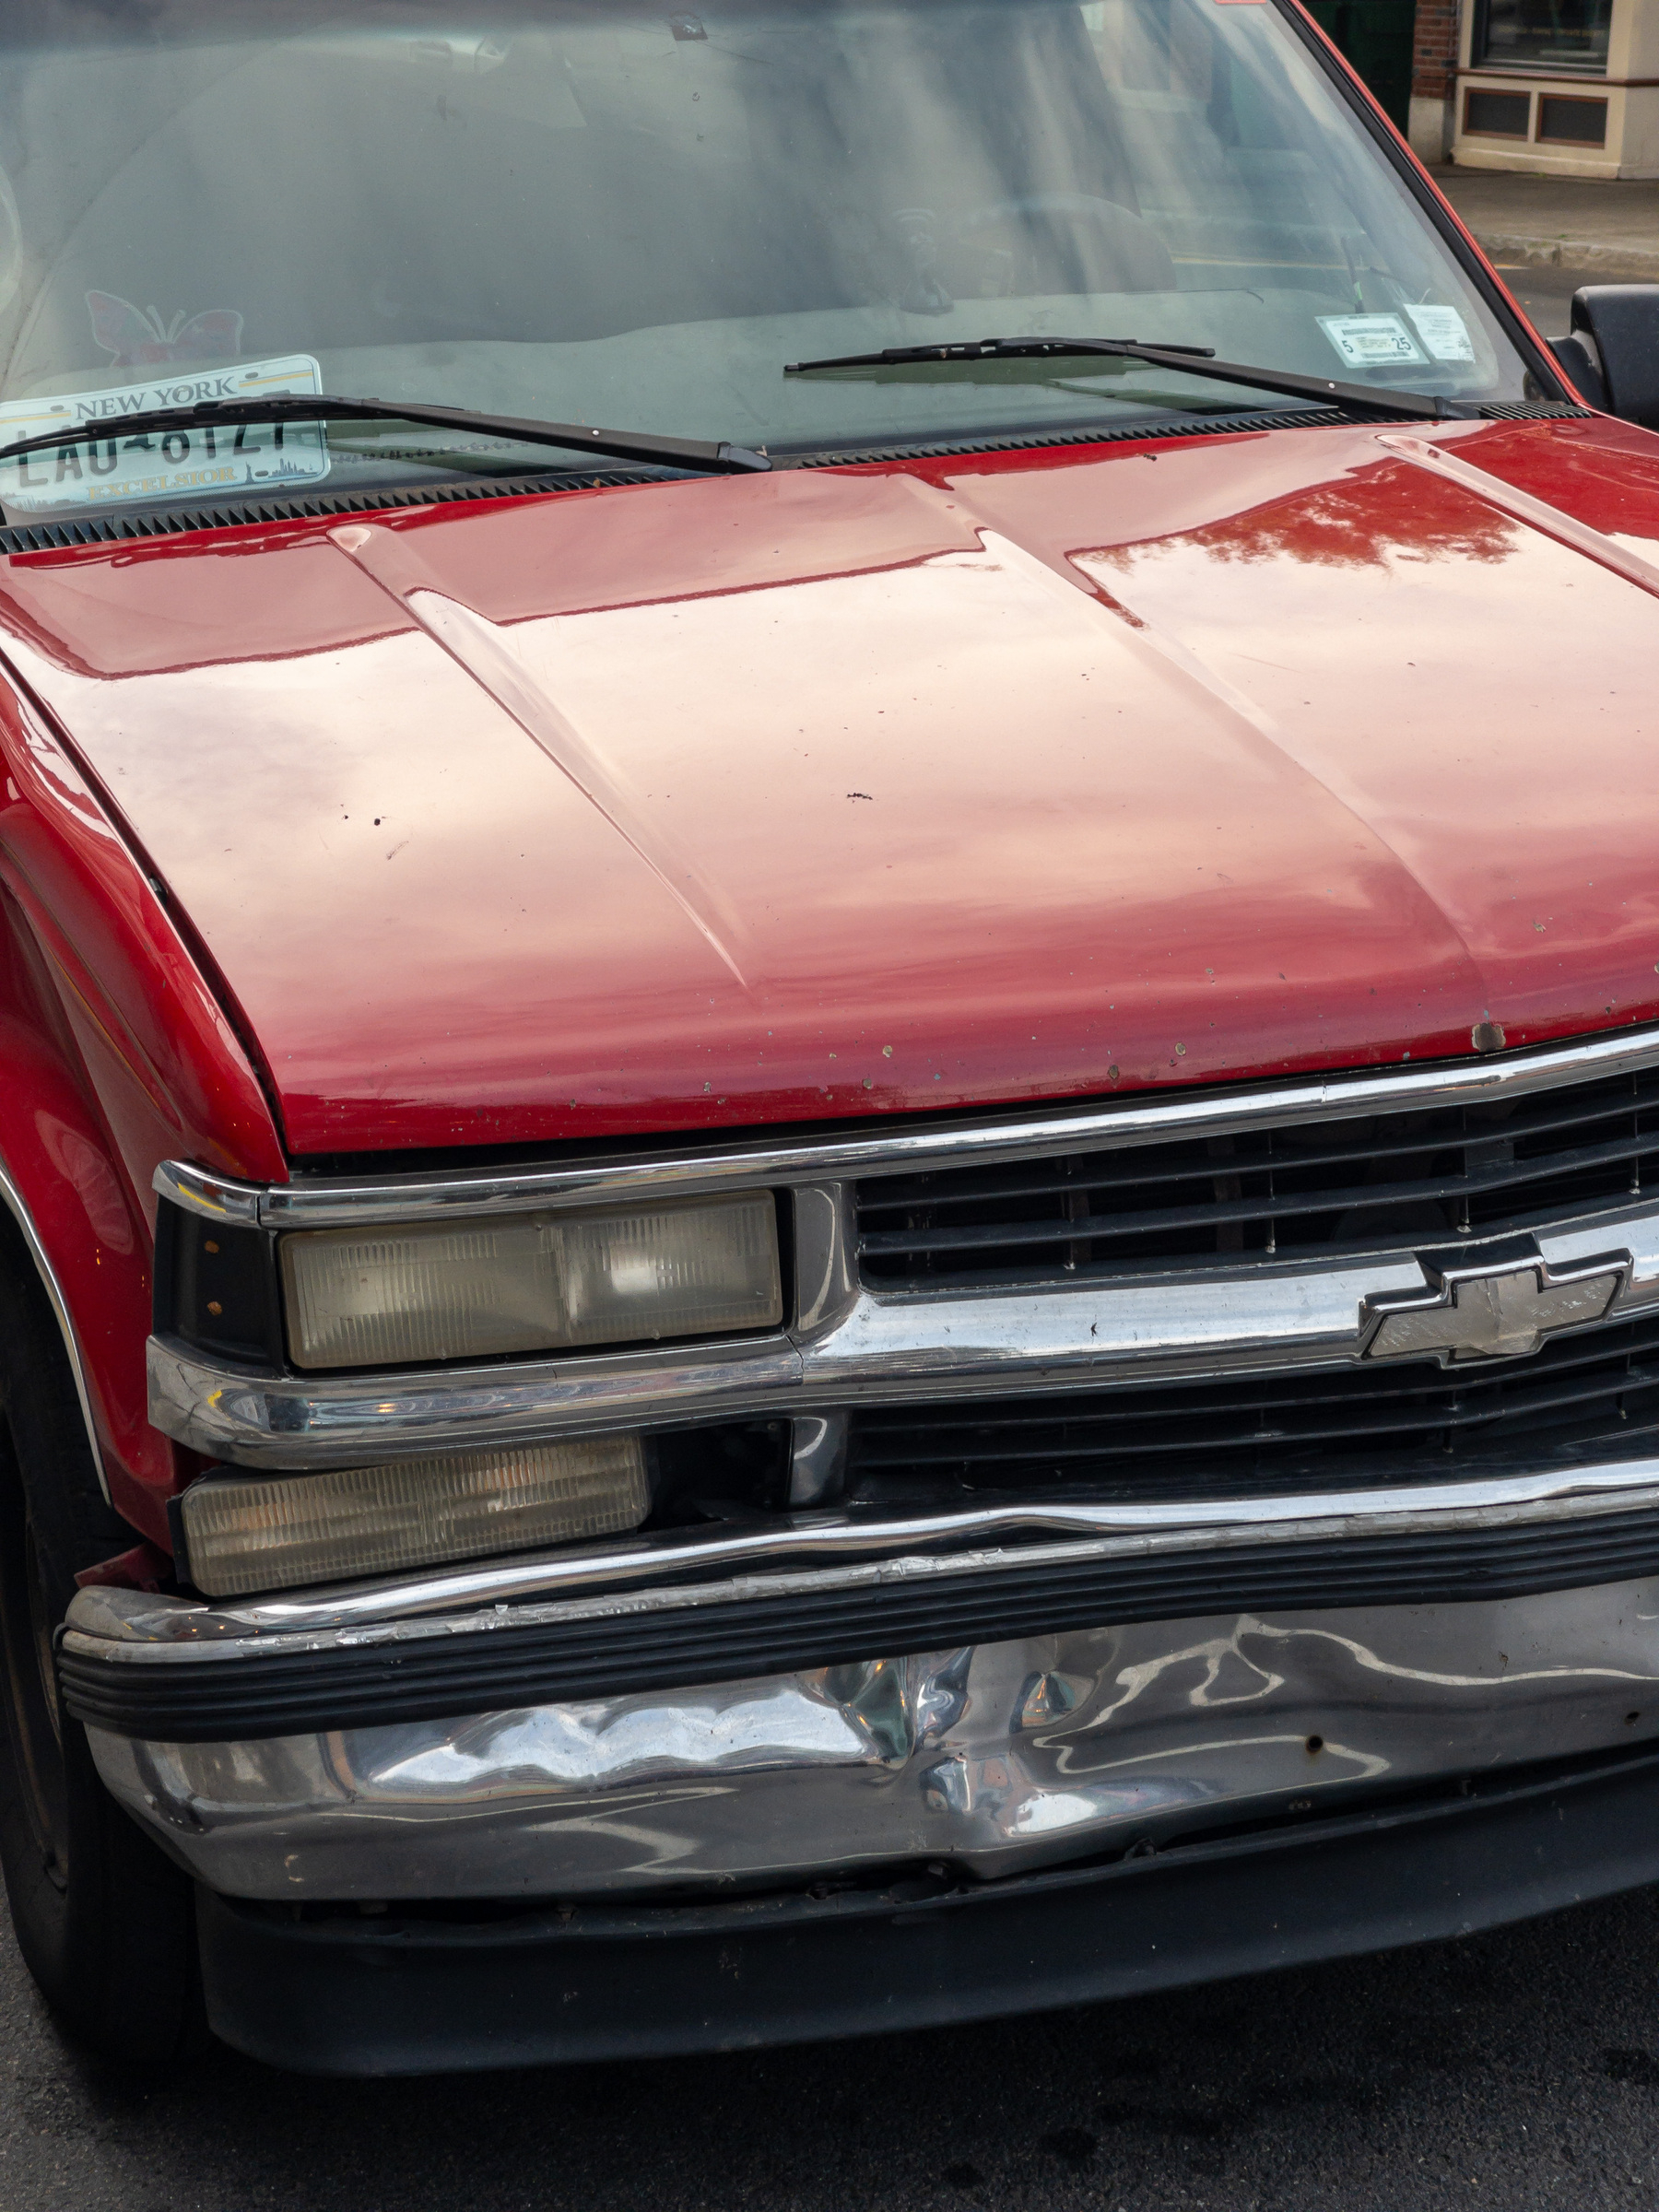 Dented chrome fender of an old red Chevrolet pickup truck.